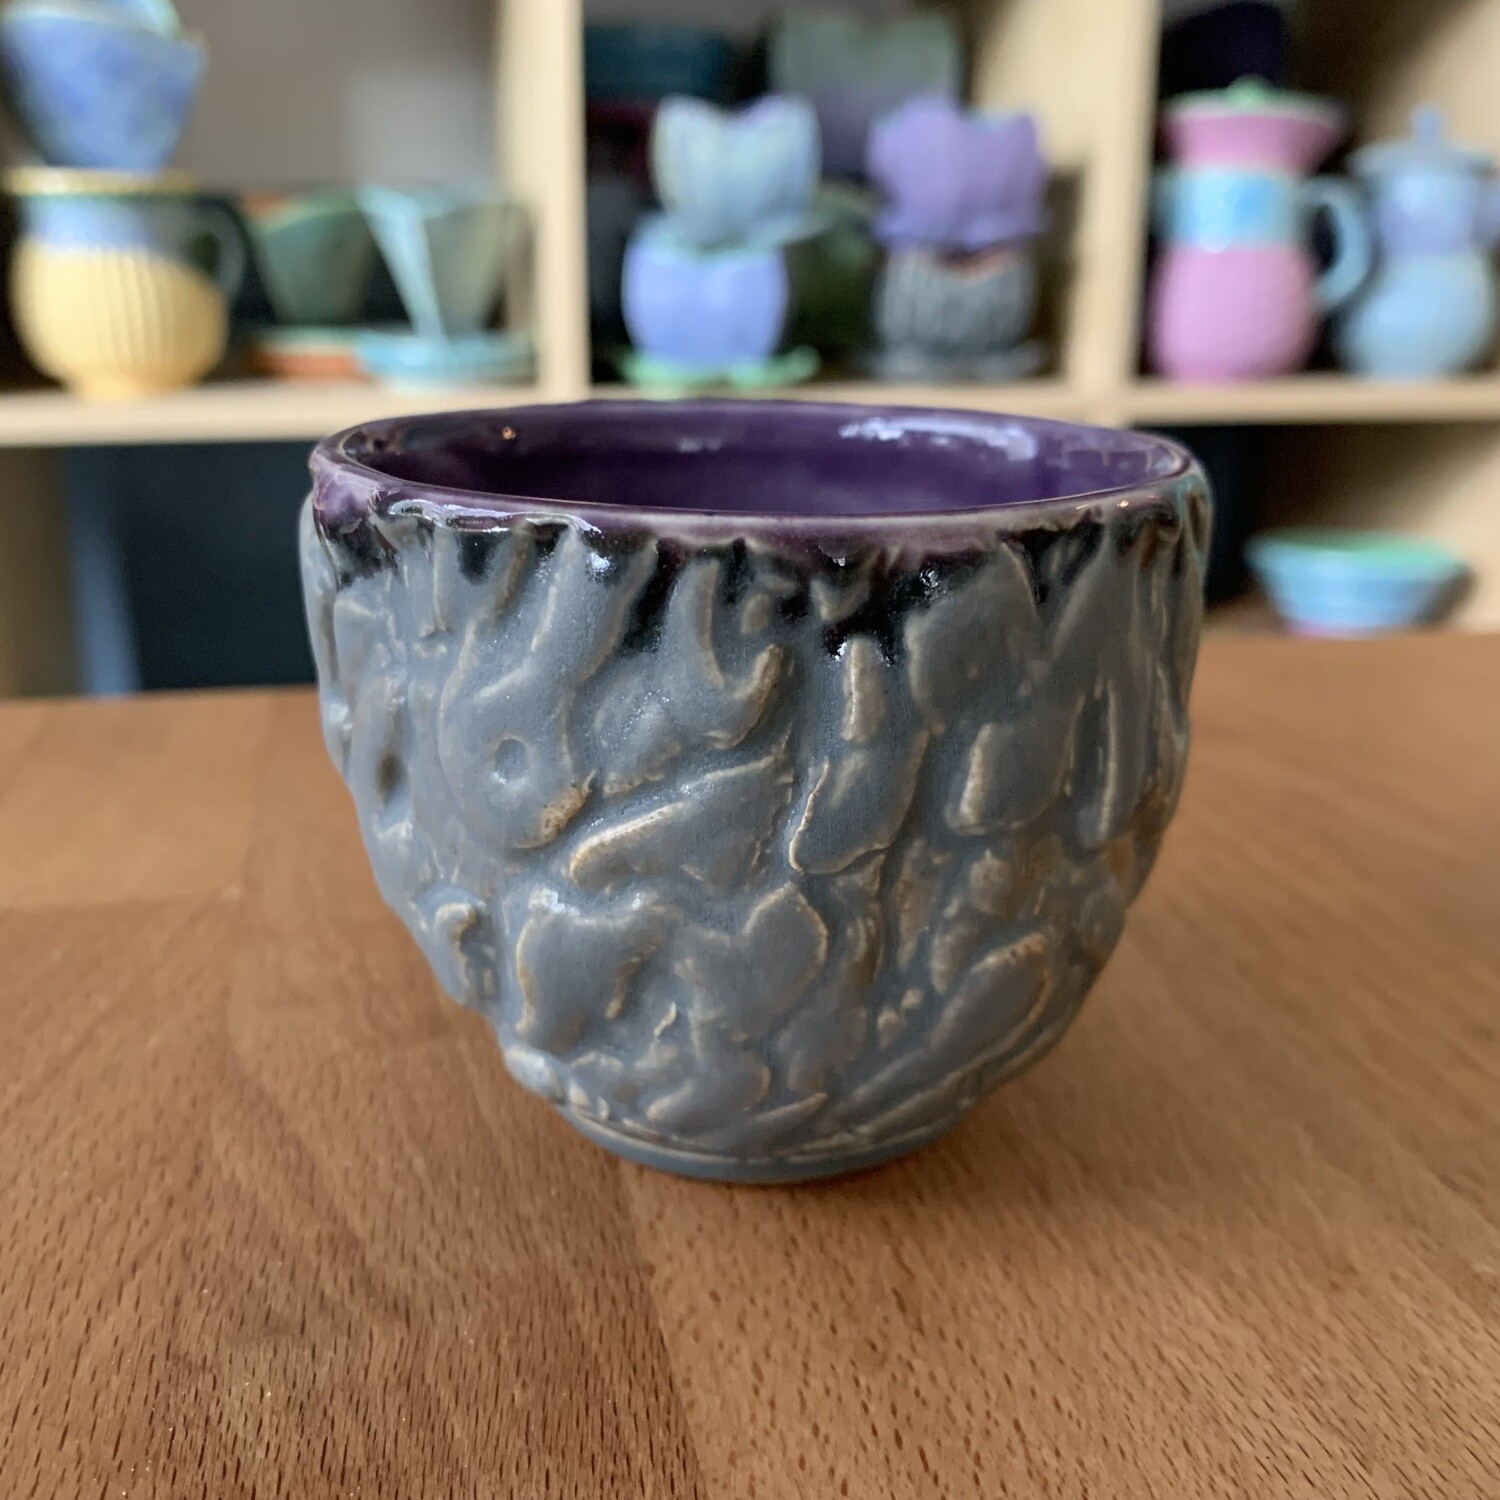 4oz Espresso Cup/Tiny Bowl in purple &amp; grey